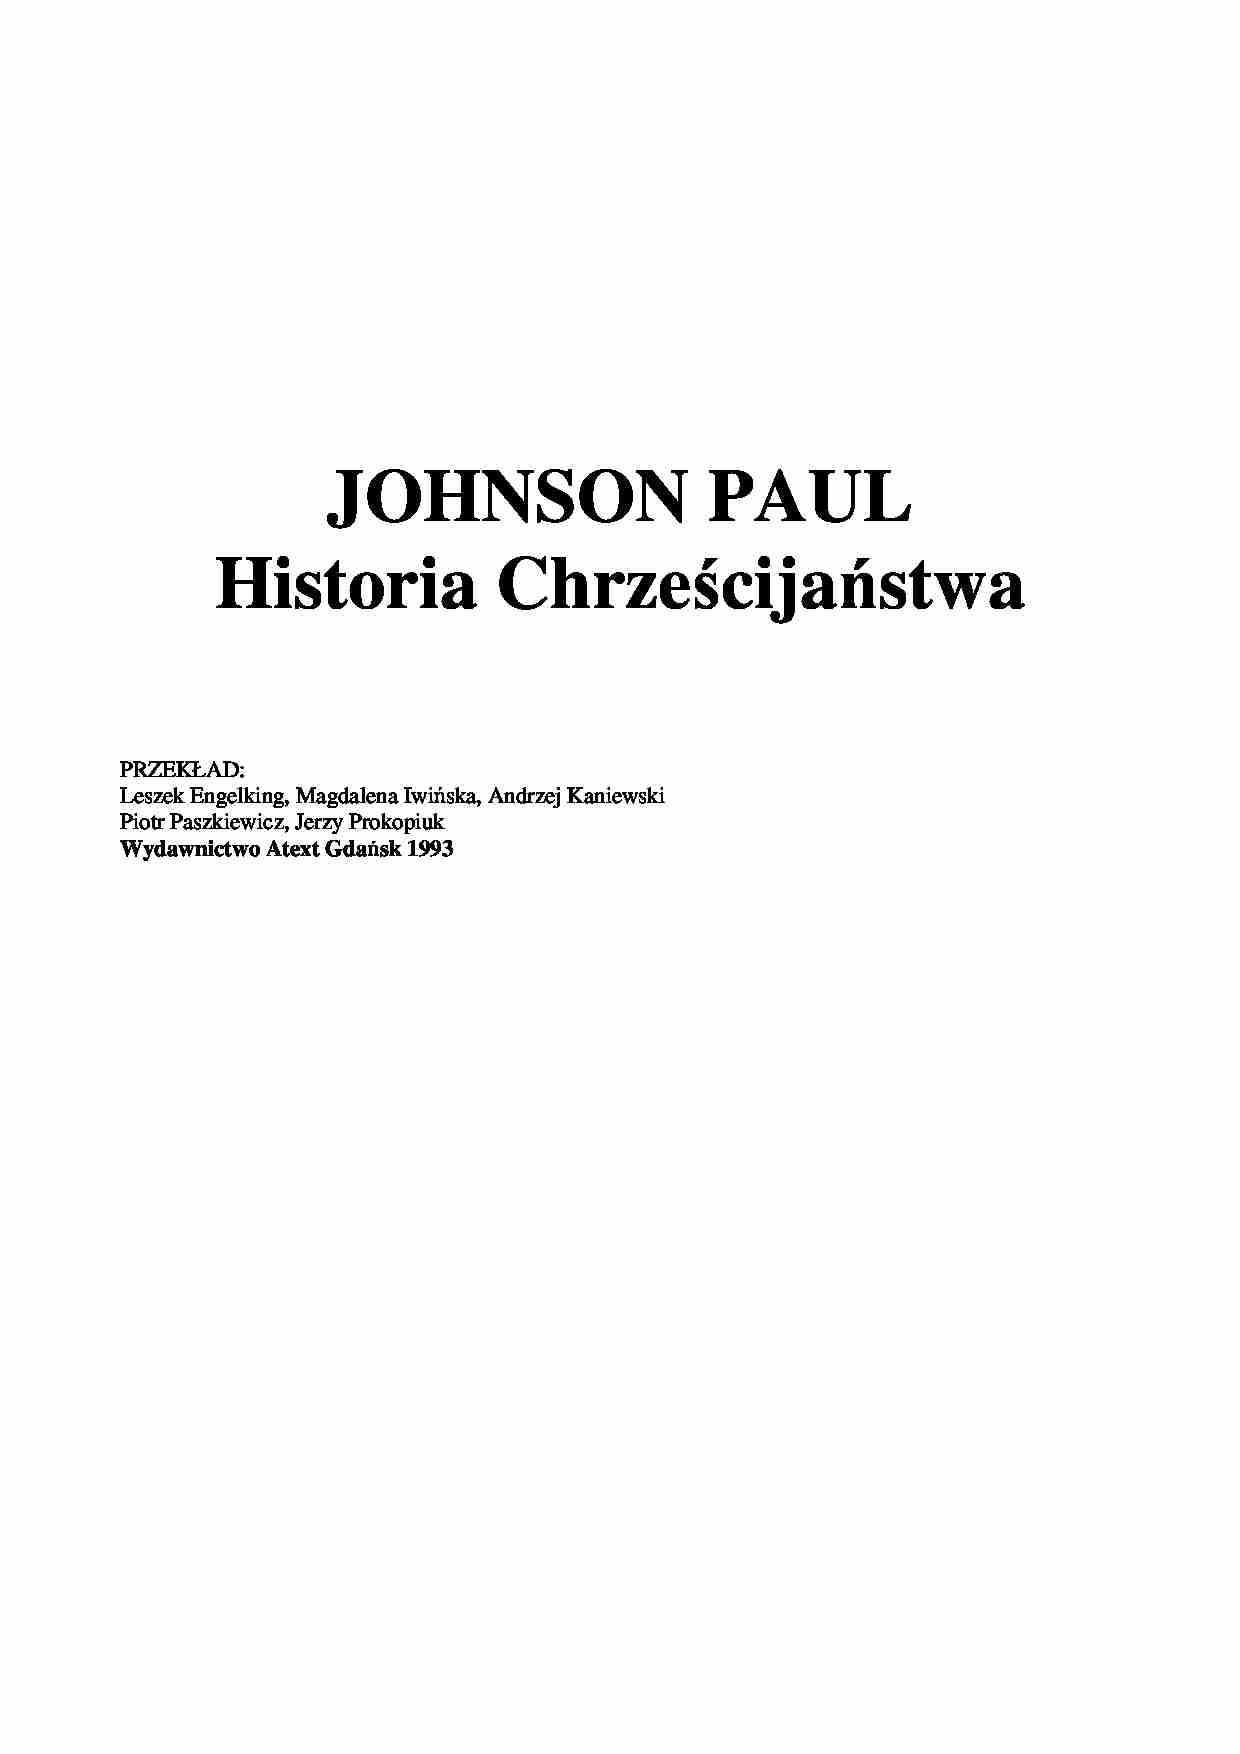 Johnson Paul - 